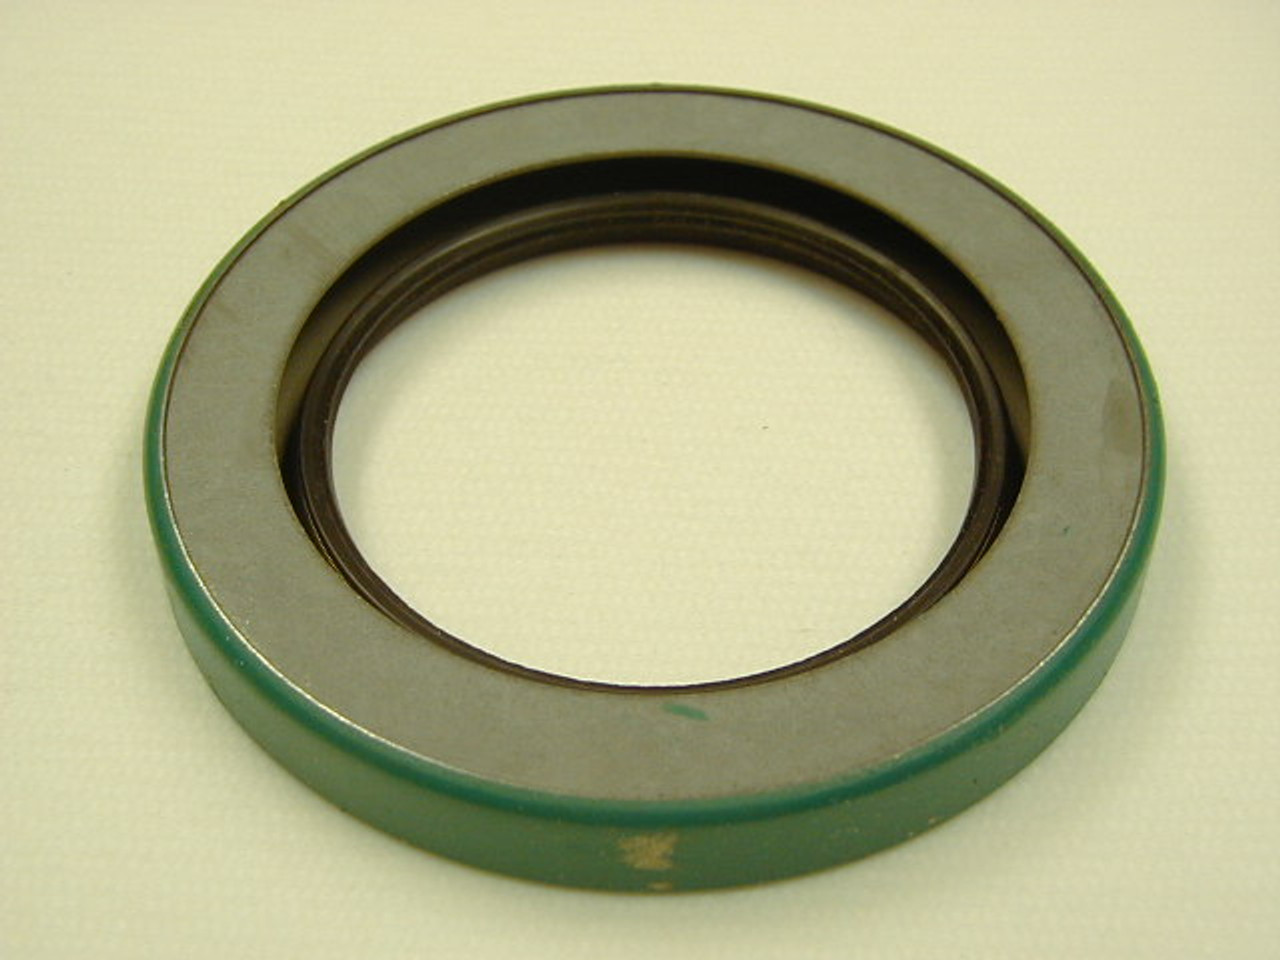 6.250" (158.75mm) Inch Reinforced Metal Single Lip Nitrile Oil Seal  62495 CRWH1 R